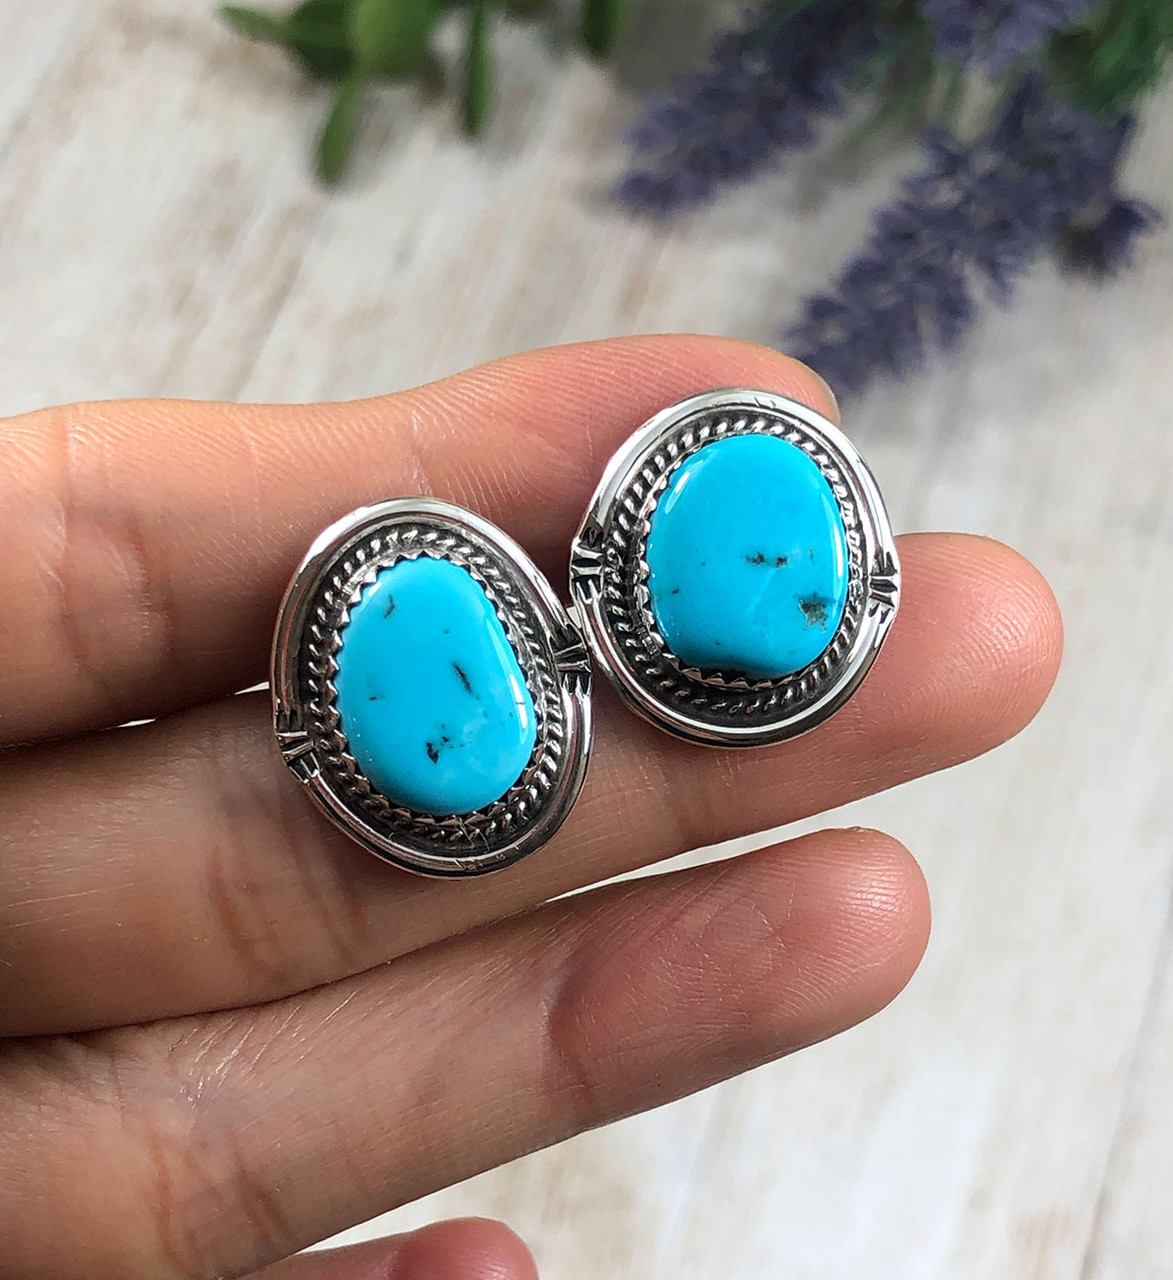 Zuni Pueblo Turquoise Stud Earrings - Southwest Indian Foundation - 6480